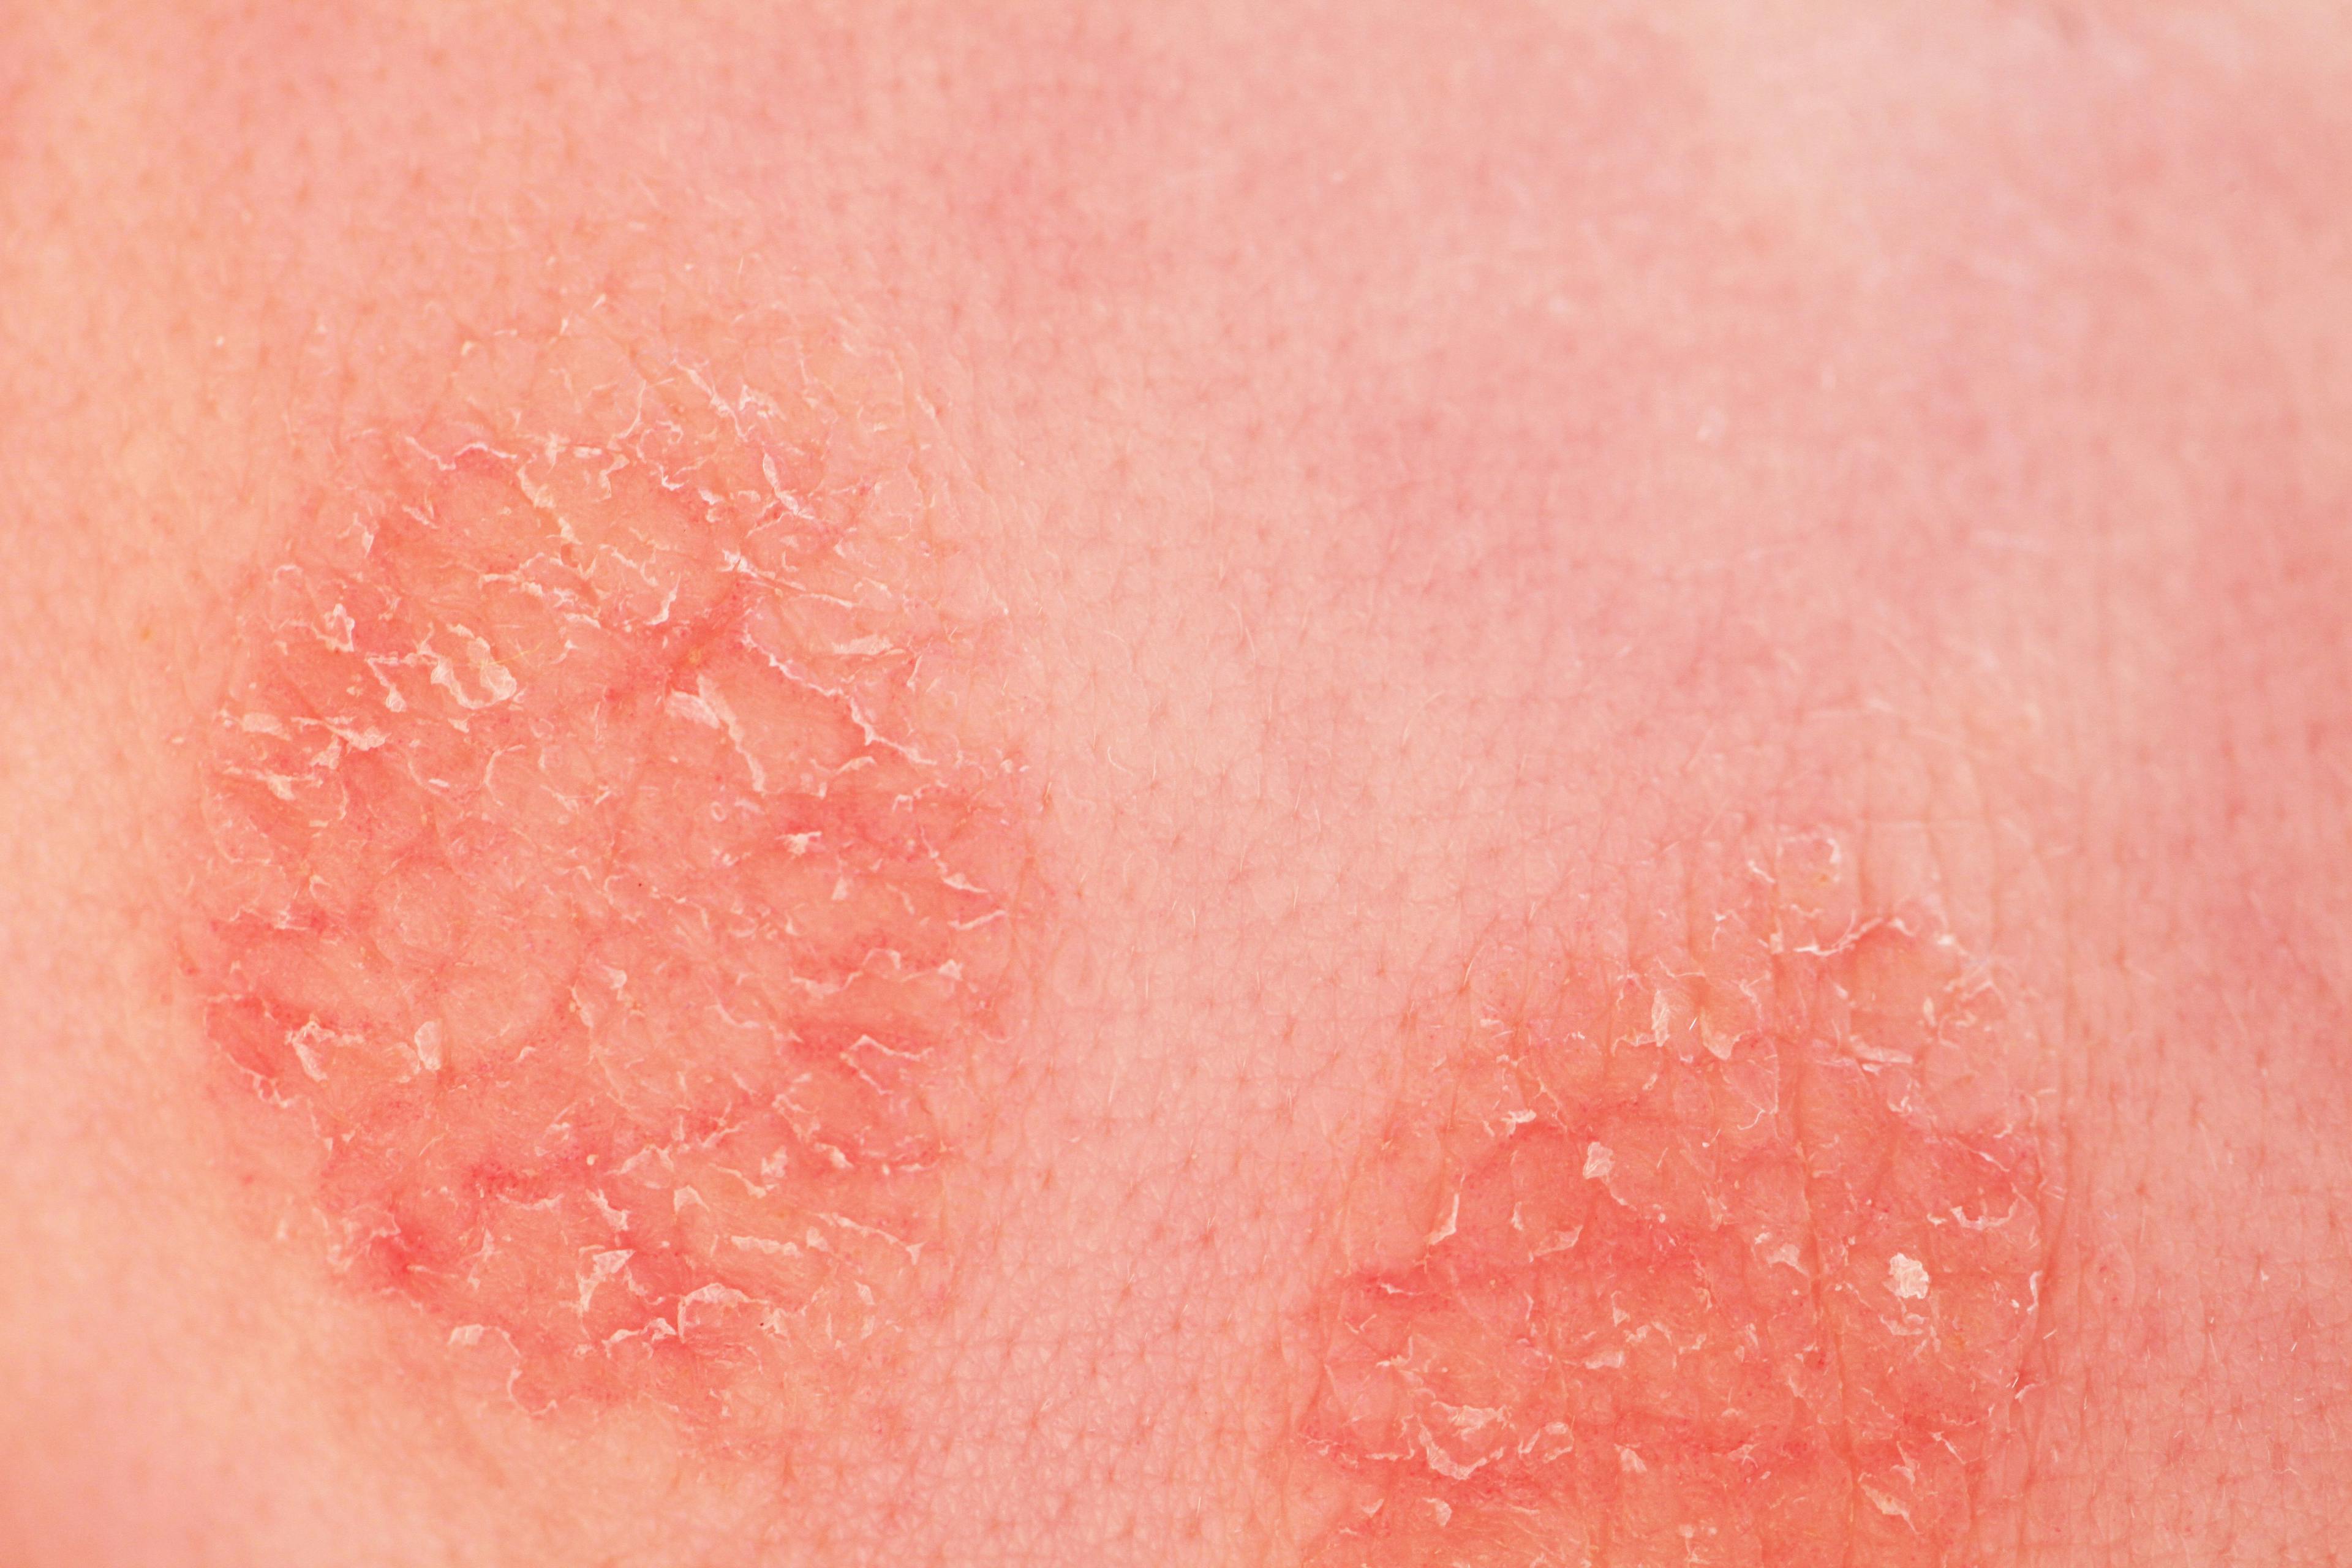 A Dermatology Rash Diagnostic for the Allergist